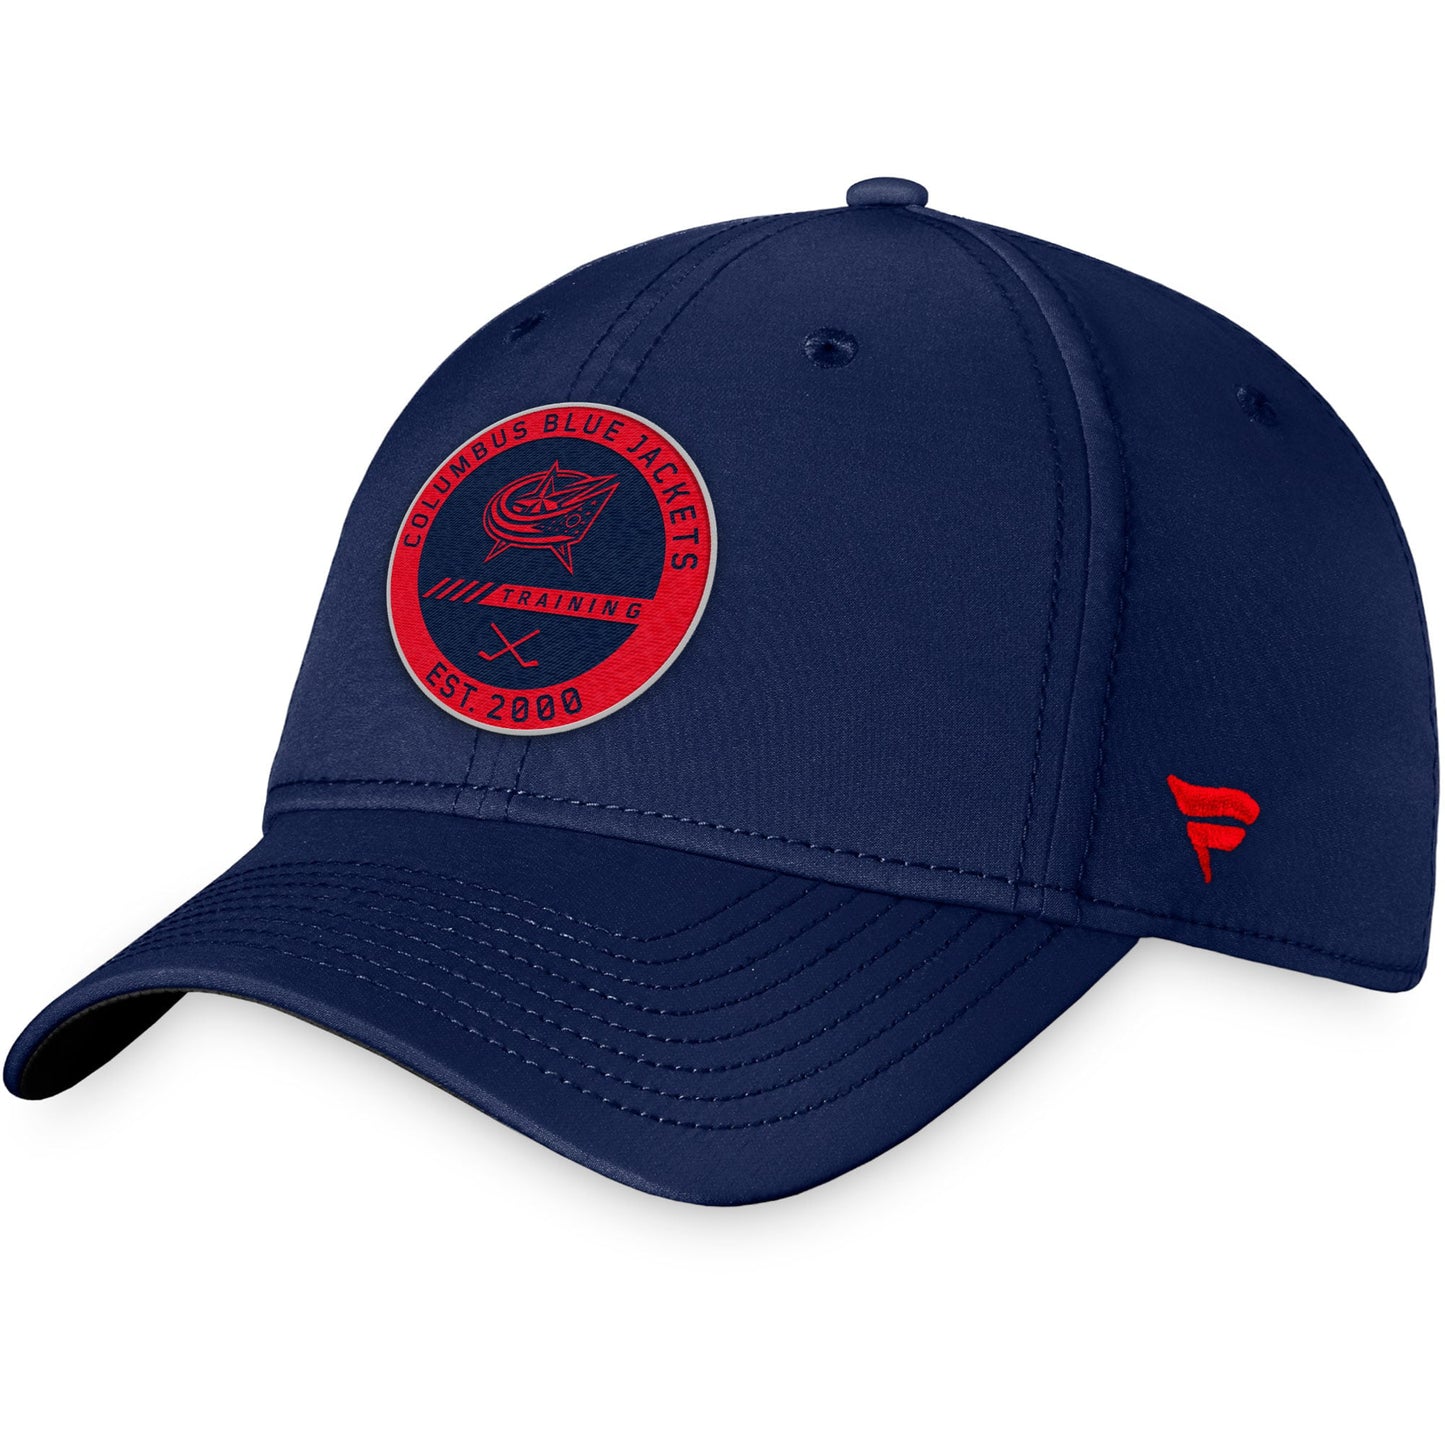 Men's Fanatics Branded Navy Columbus Blue Jackets Authentic Pro Team Training Camp Practice Flex Hat